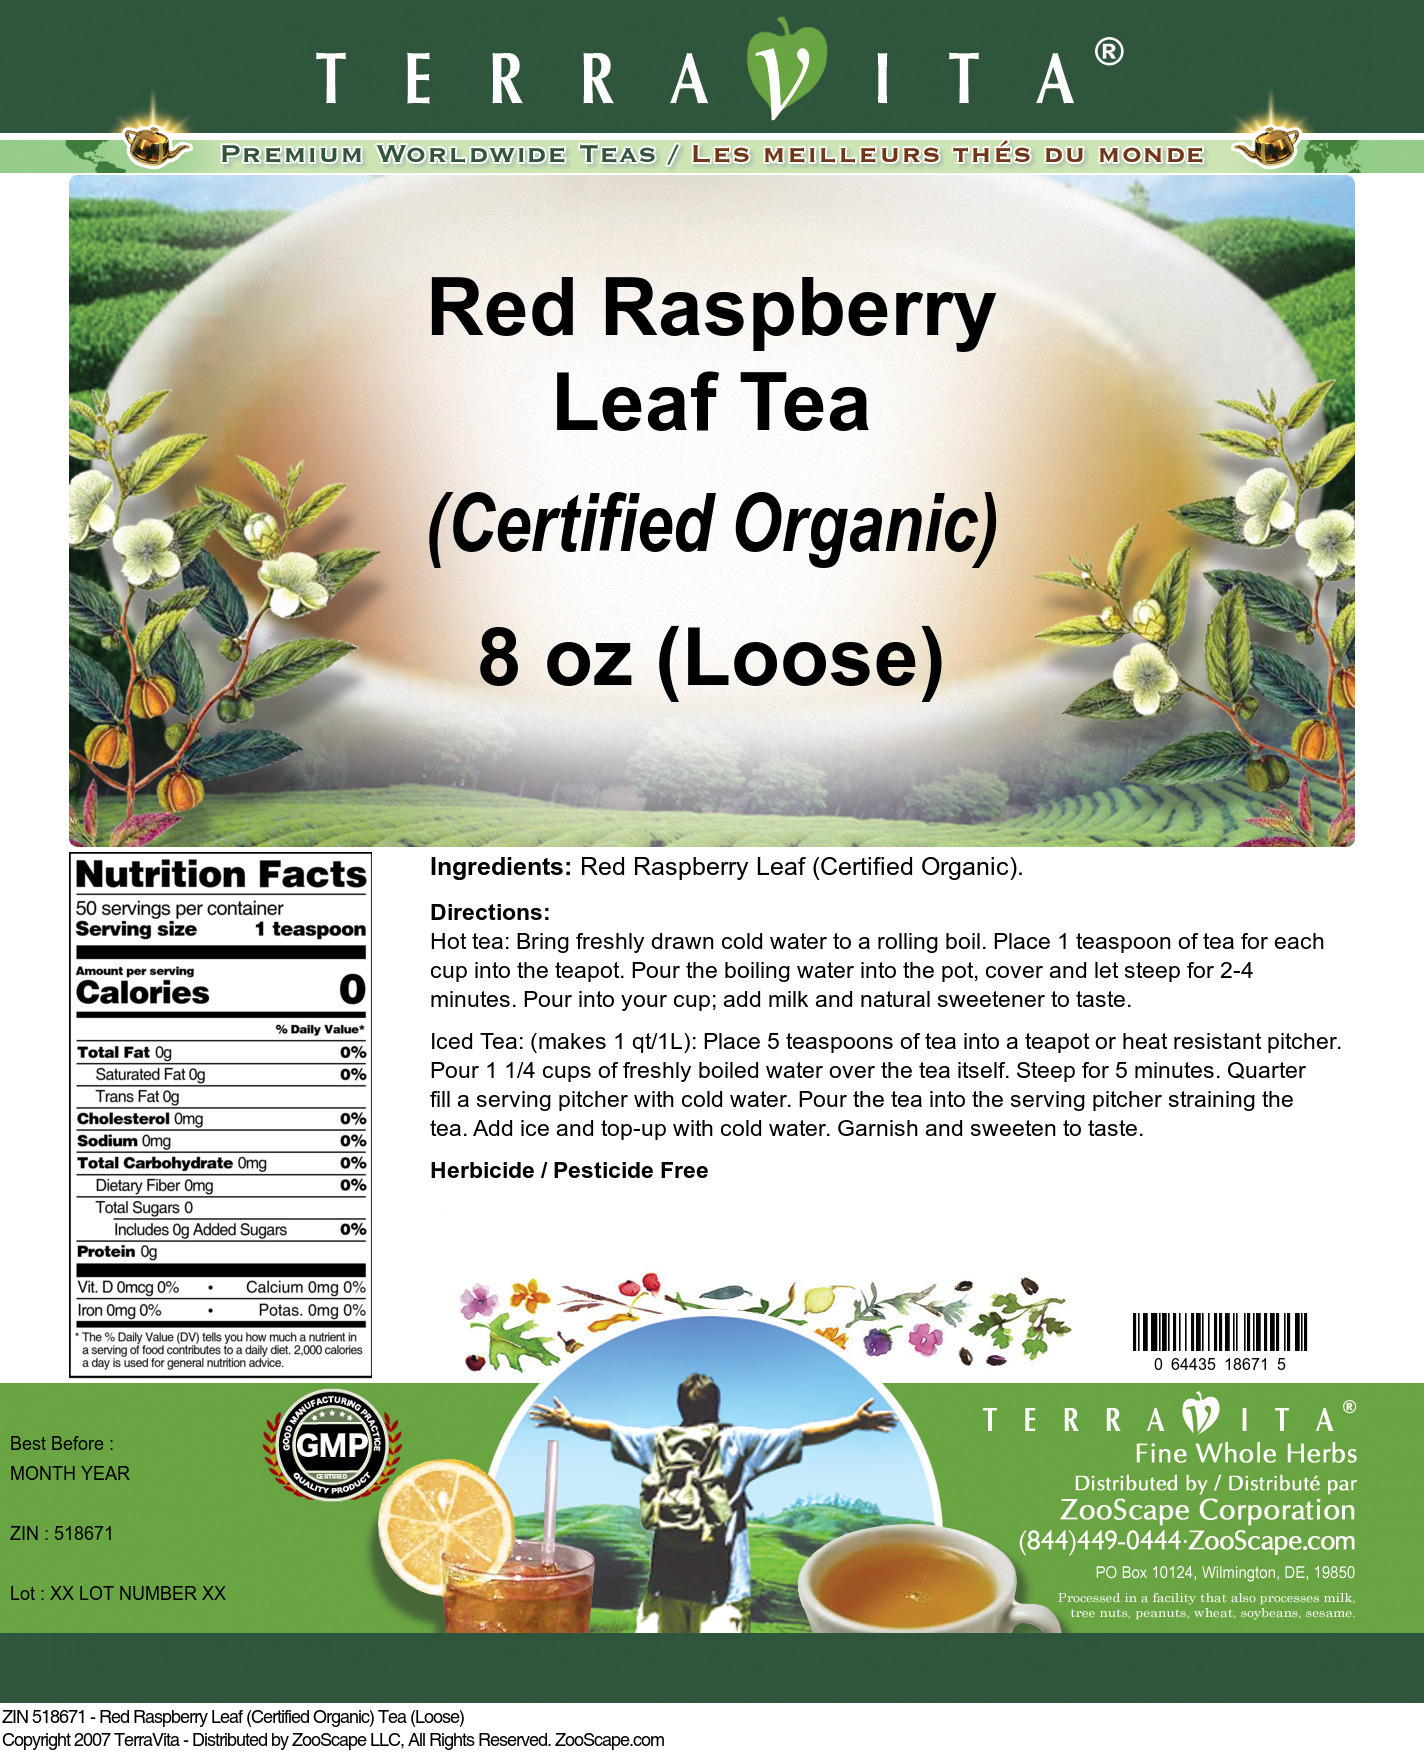 Red Raspberry Leaf (Certified Organic) Tea (Loose) - Label